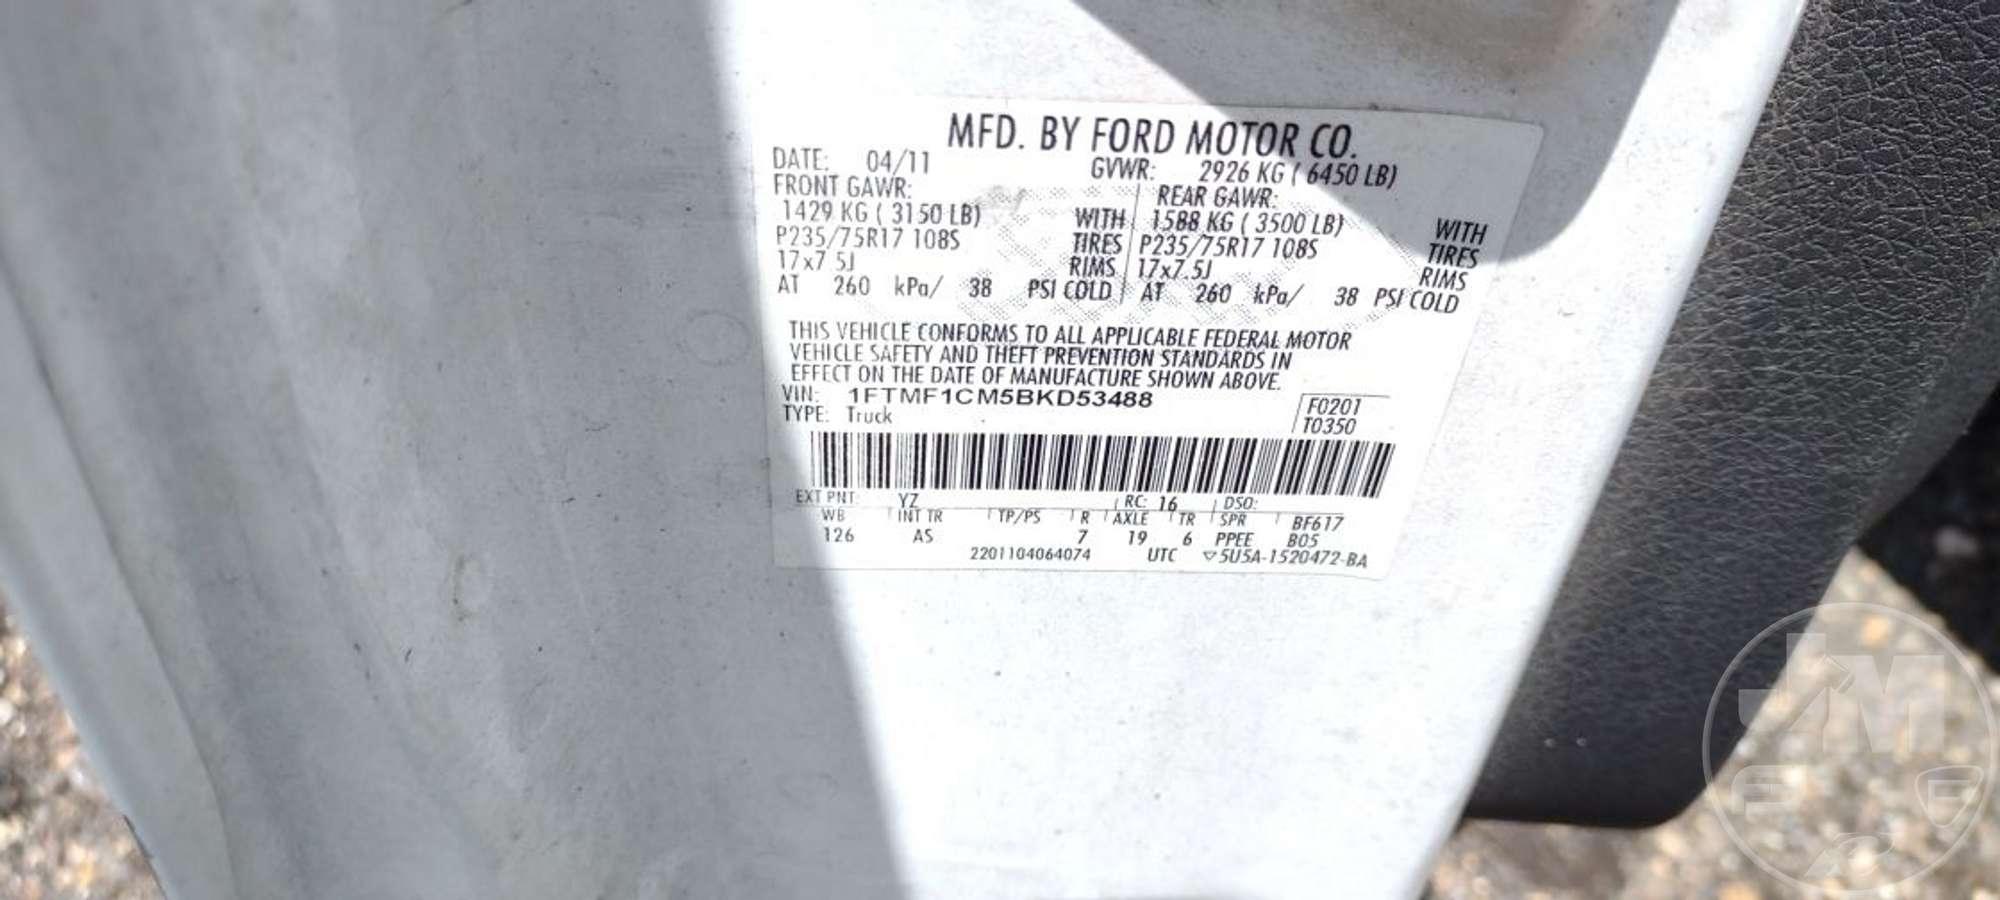 2014 FORD F-150 XL VIN: 1FTMF1CM0EKE66155 1/2 TON REGULAR CAB PICK UP TRUCK